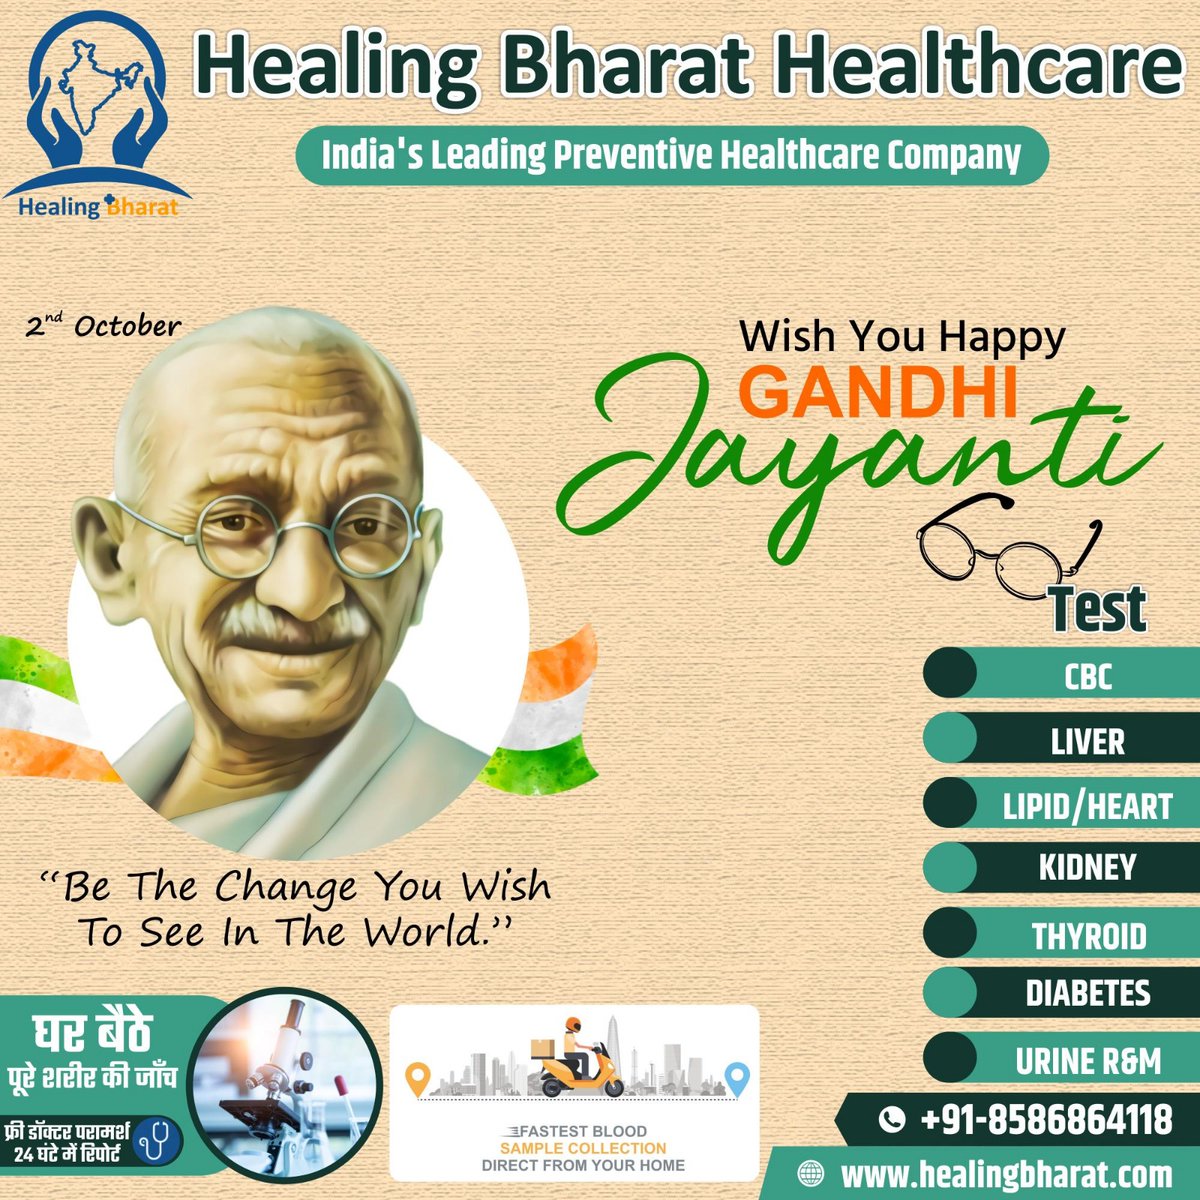 Happy Gandhi Jayanti! Let’s work towards a better world together. #happygandhijayanti #MahatmaGandhi #healthcare #HealingBharat